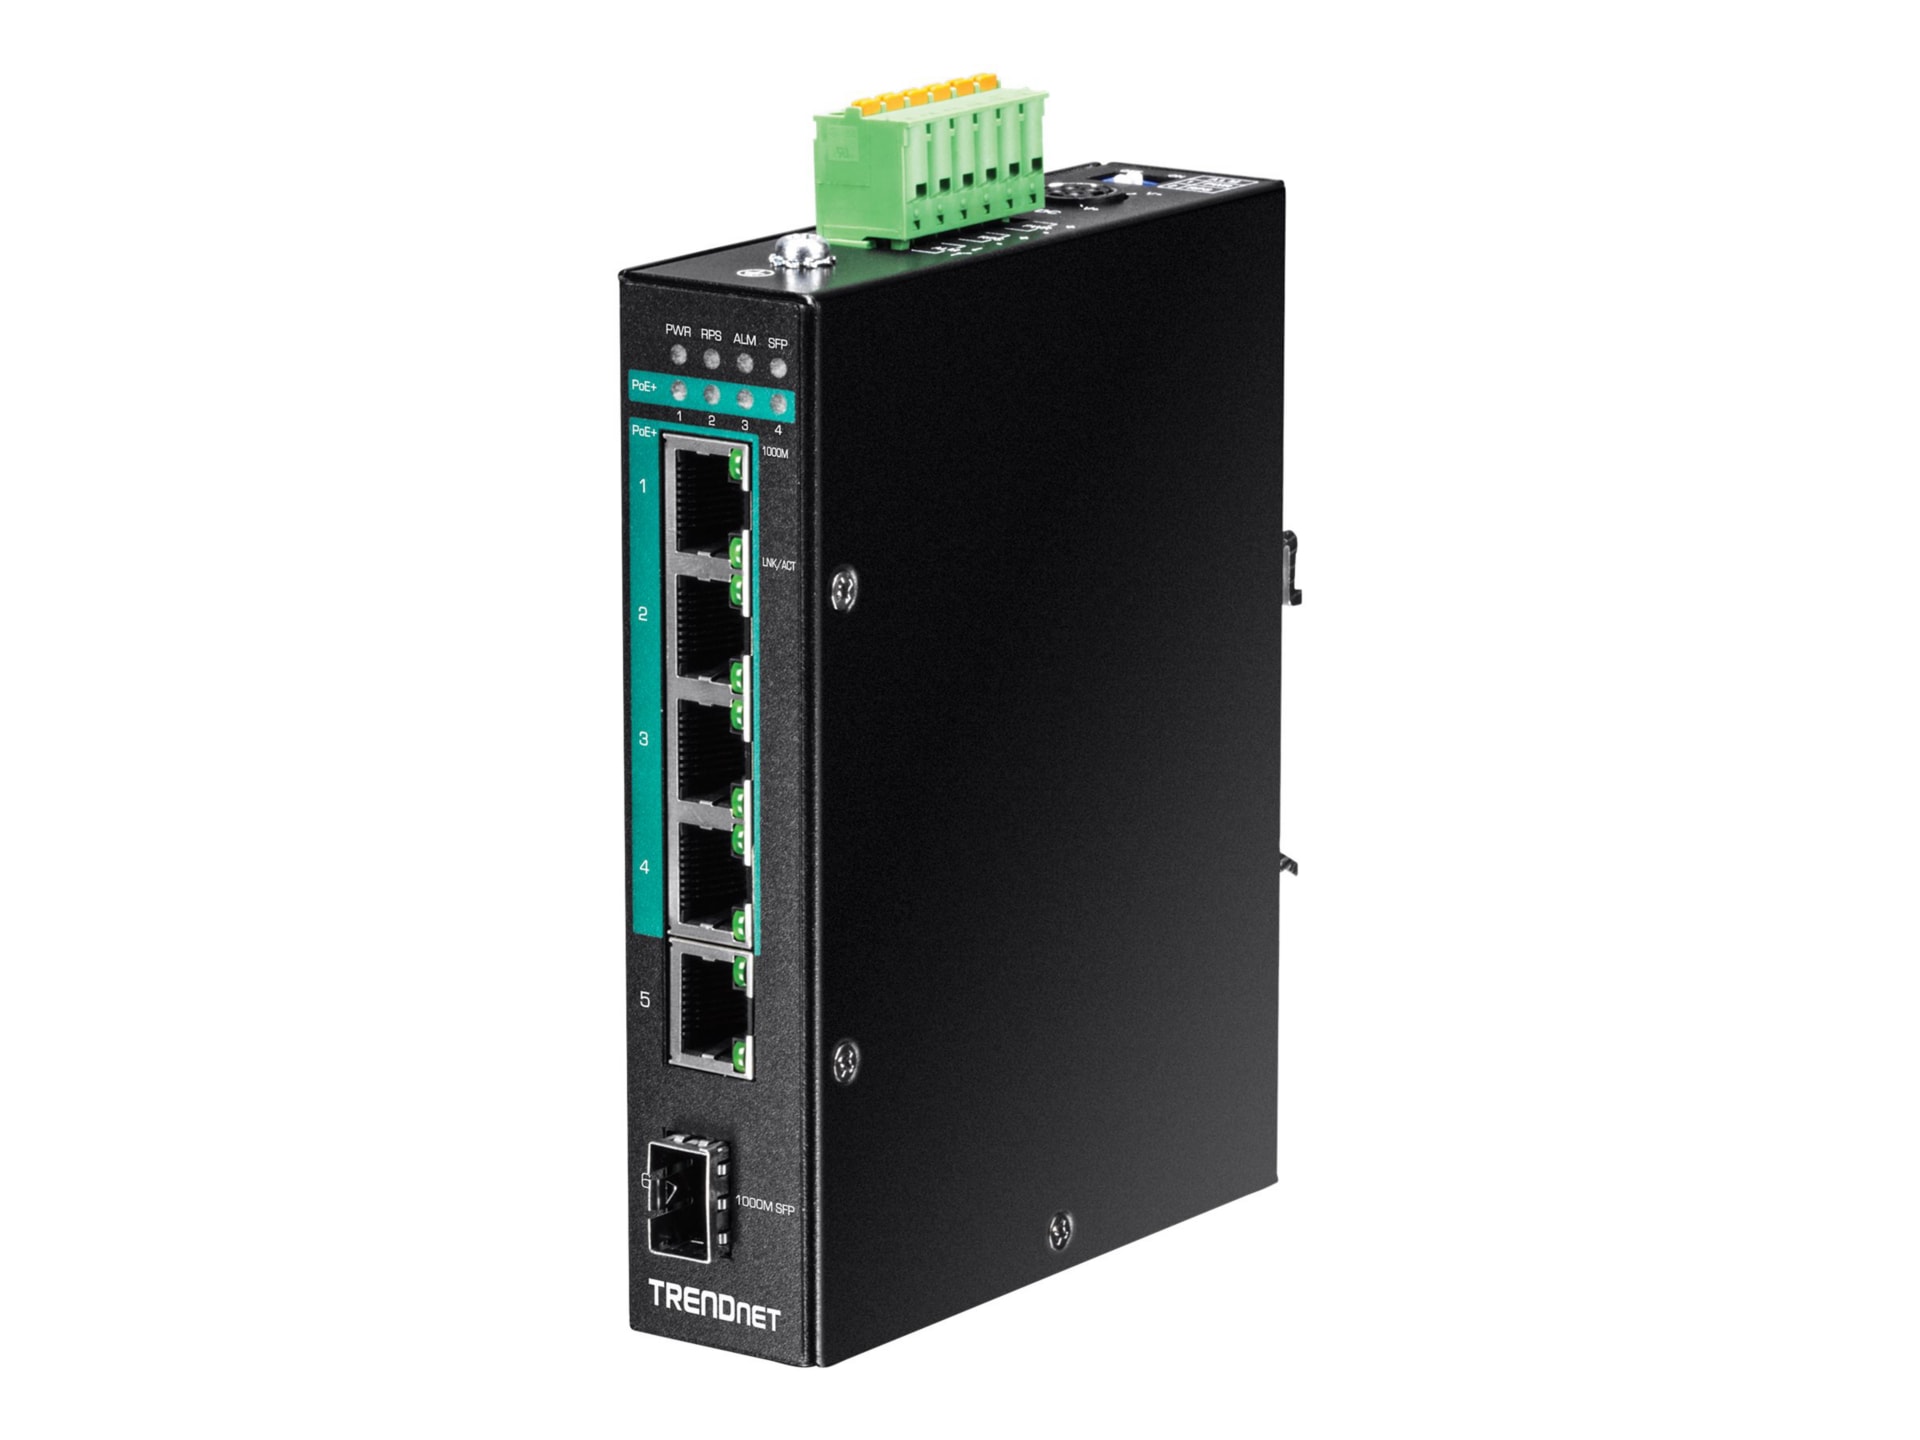 TRENDnet 6-Port Hardened Industrial Gigabit Poe+ Layer 2 Managed DIN-Rail Switch, 4 x Gigabit PoE+ 802.3at Ports, 1 x